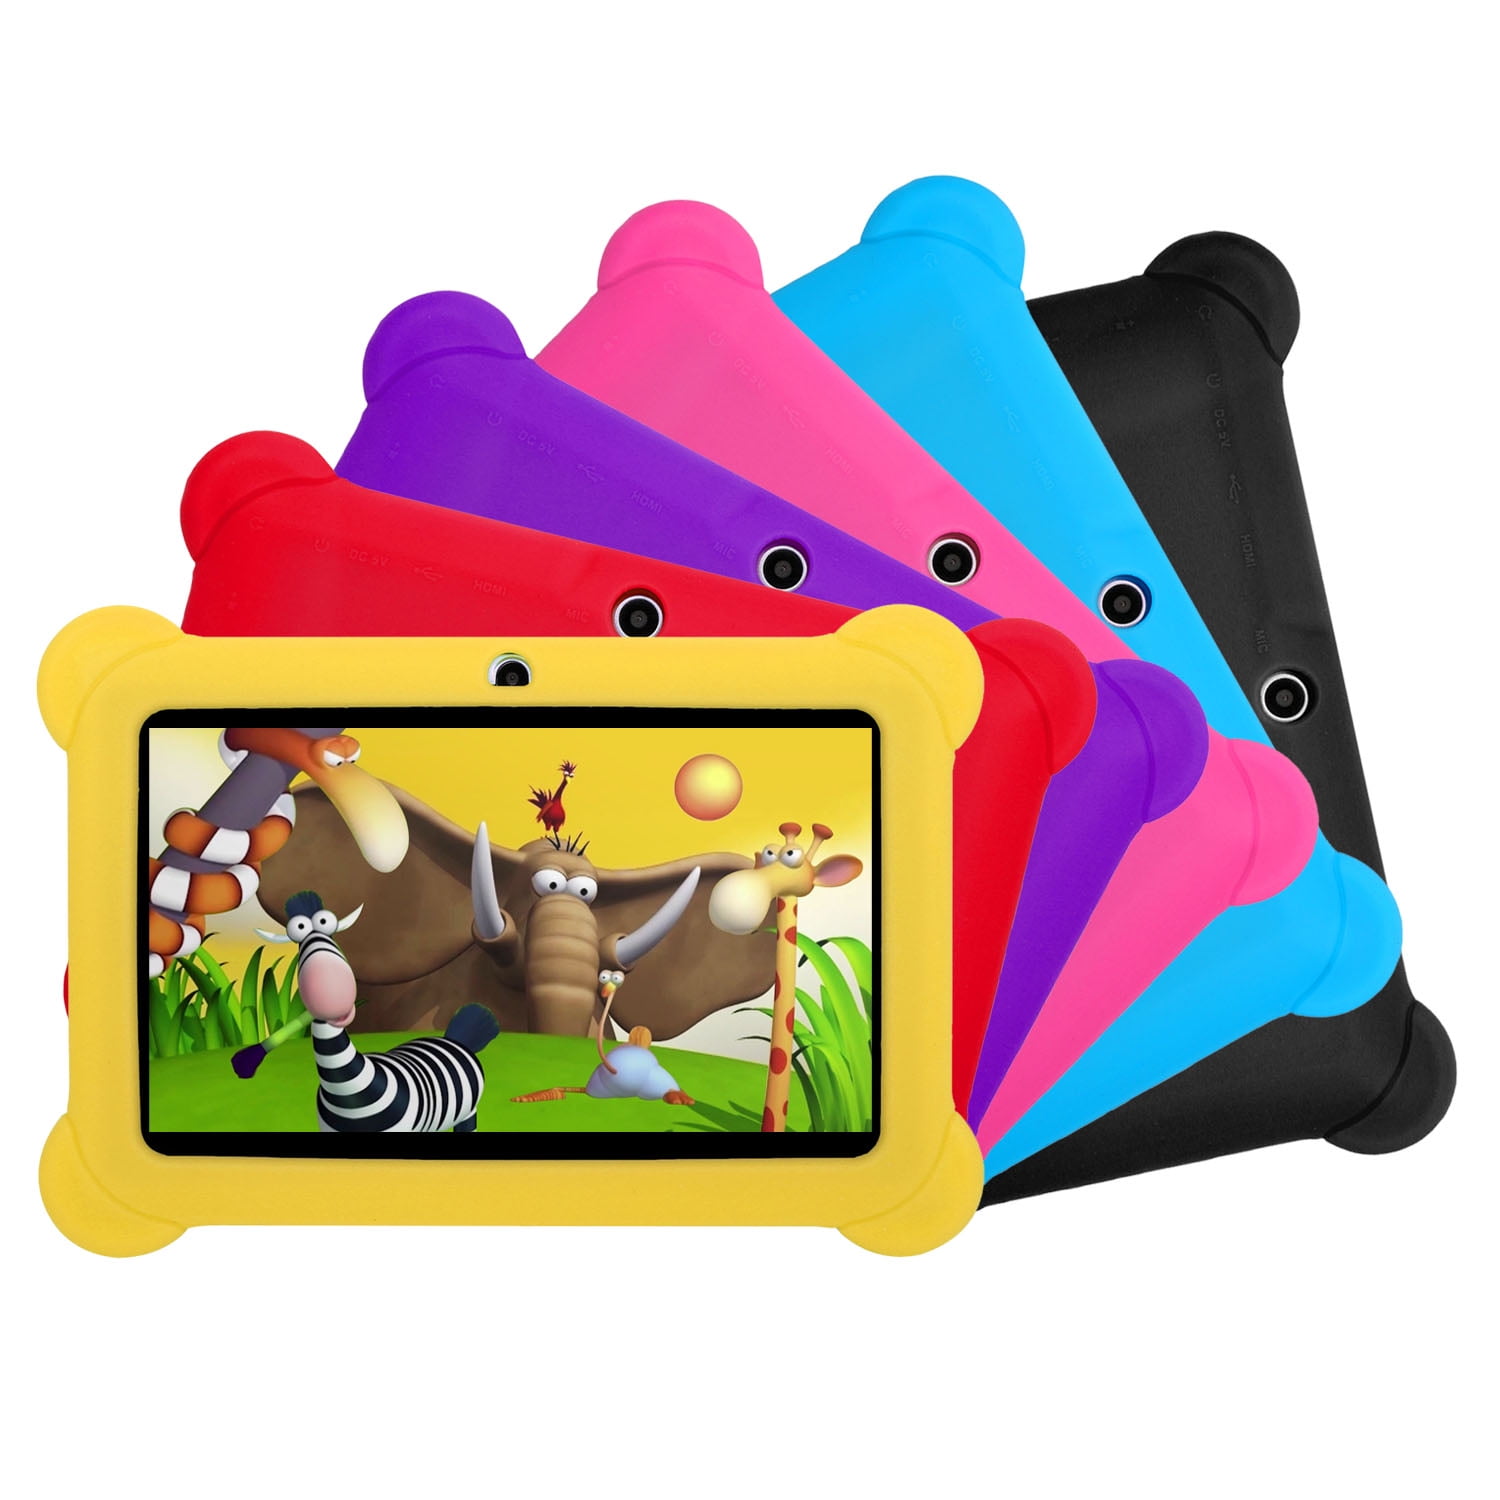 KOCASO DX758 7-Inch Quad-Core Android Kids Tablet - Black - Walmart.com